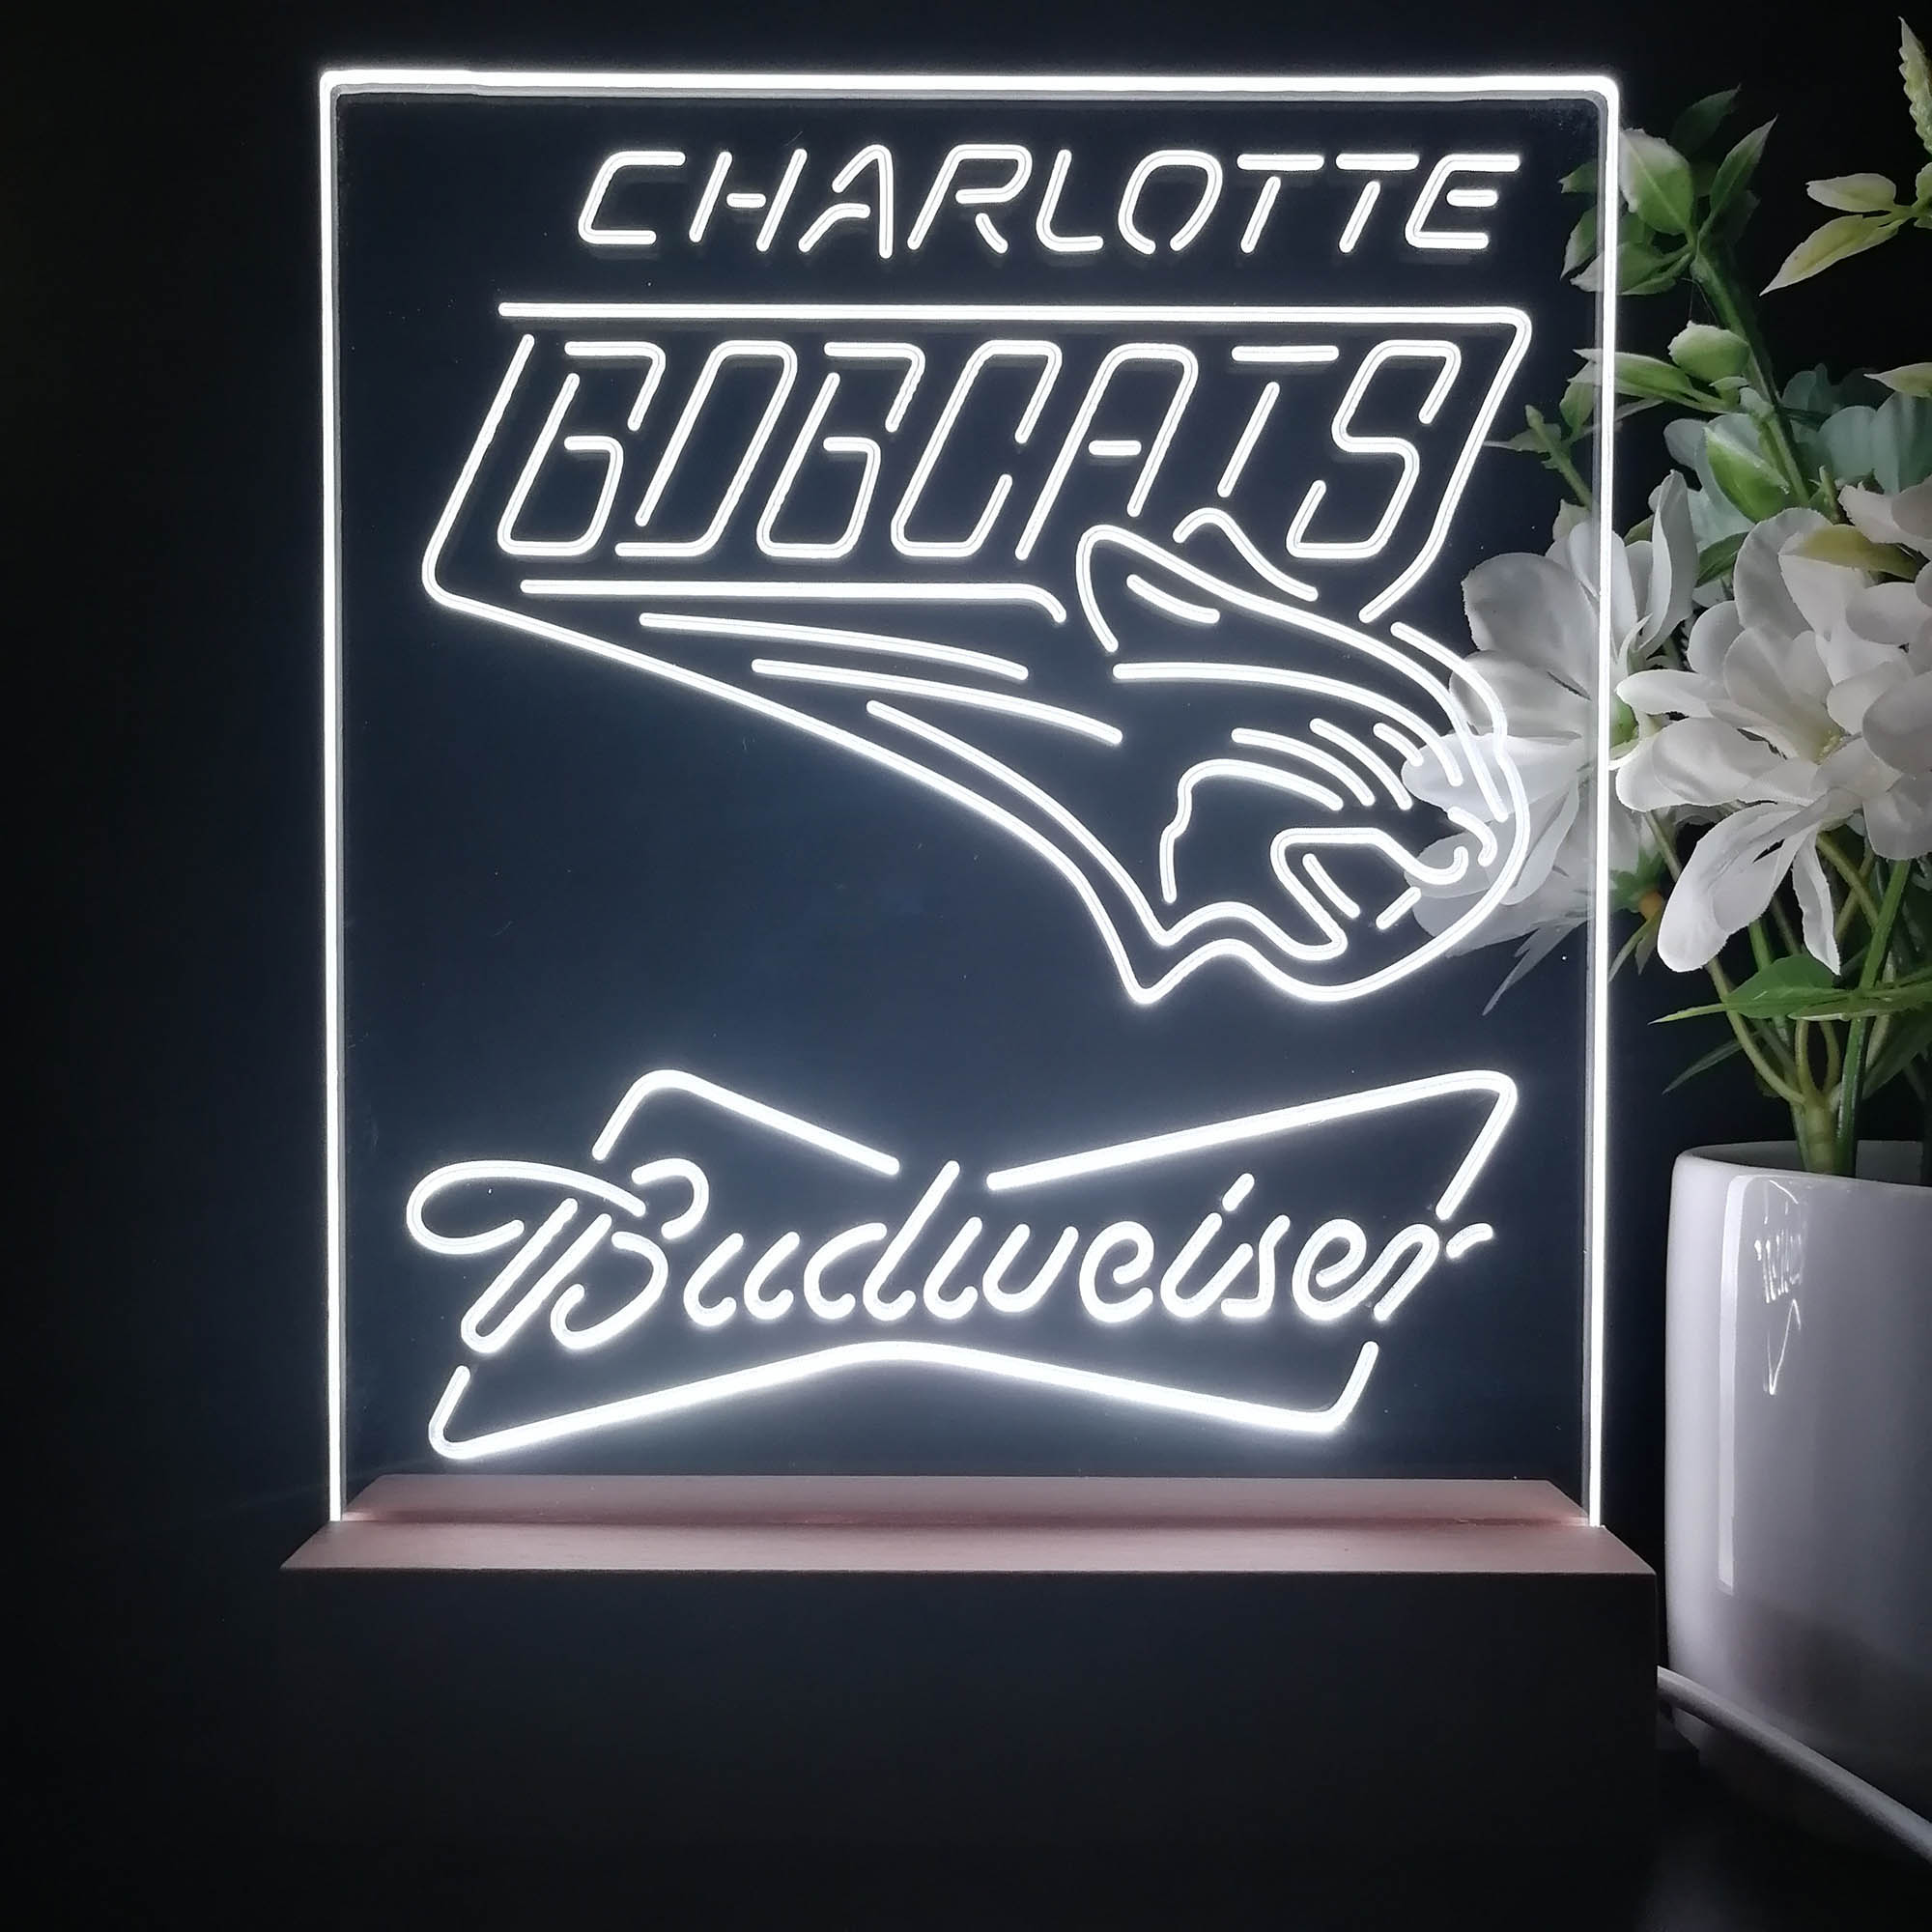 Charlotte Bobcats Budweiser Neon Sign Pub Bar Lamp